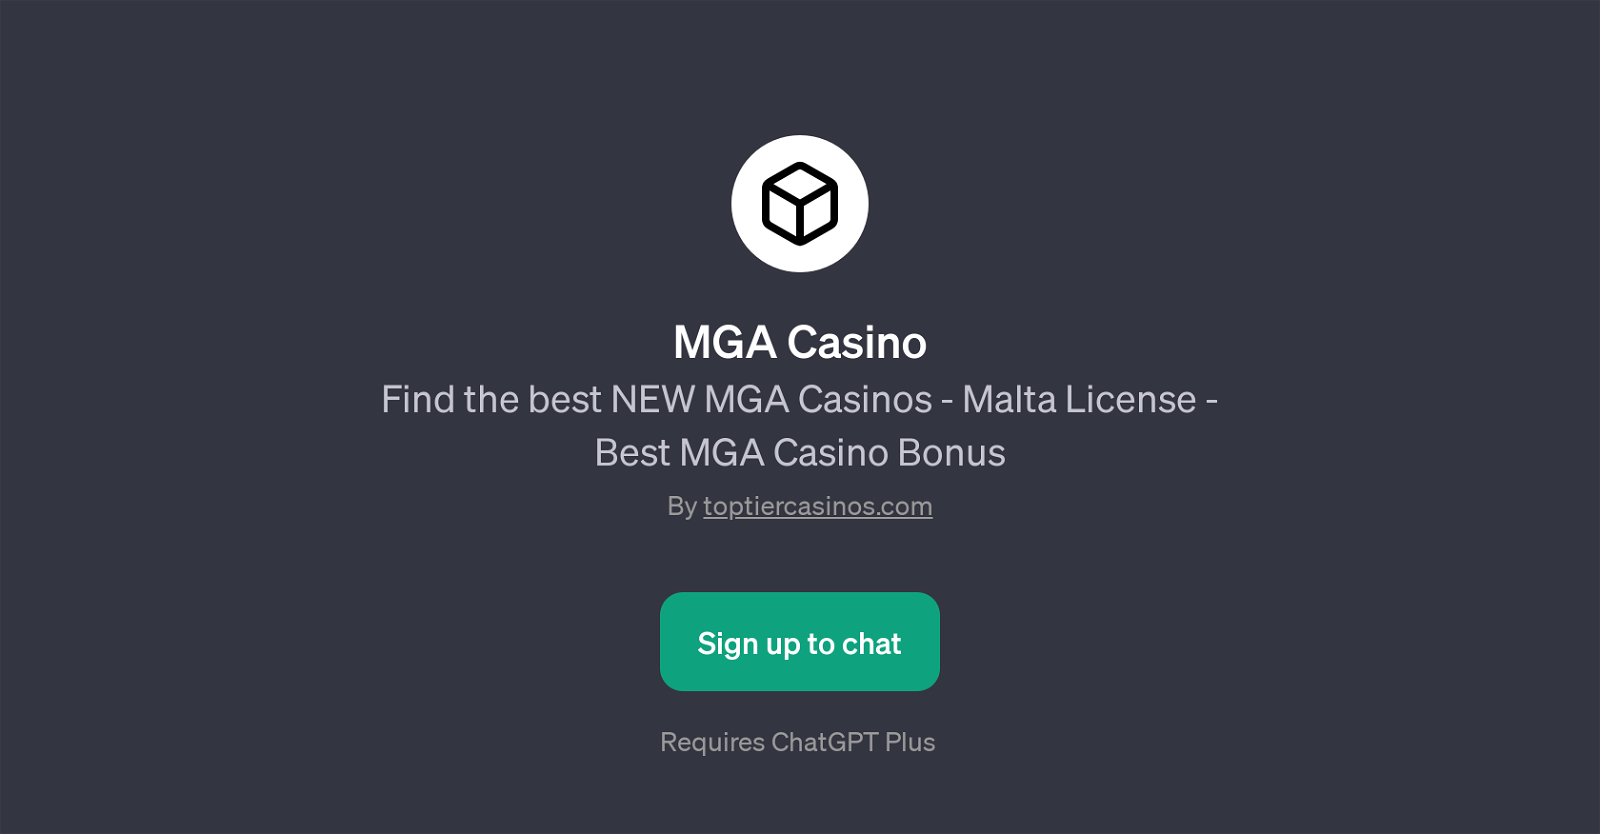 MGA Casino website